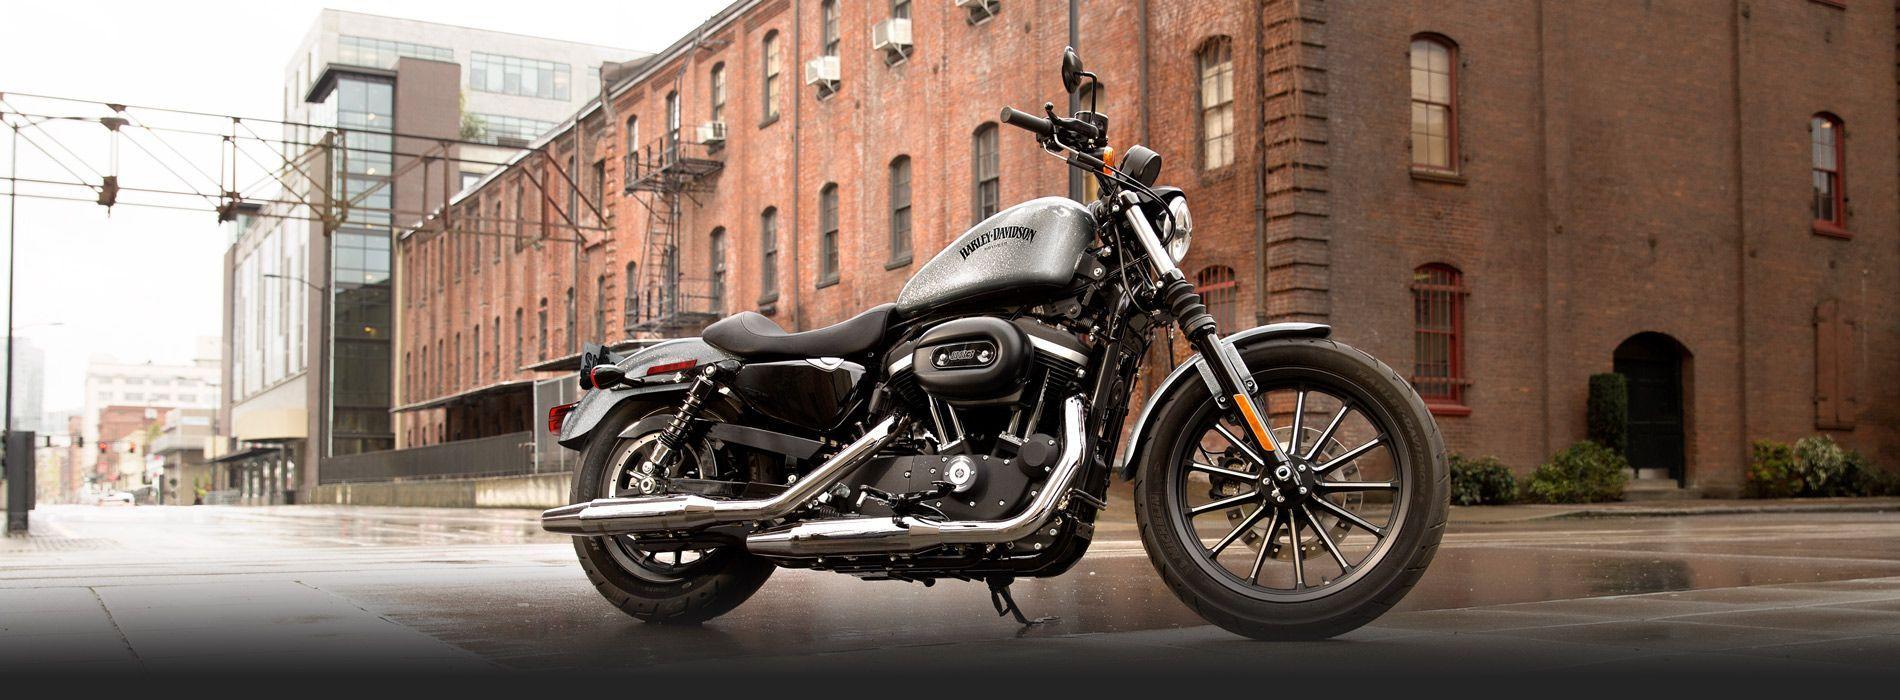 Sportster Iron 883. Bobber Motorcycle. Harley Davidson USA